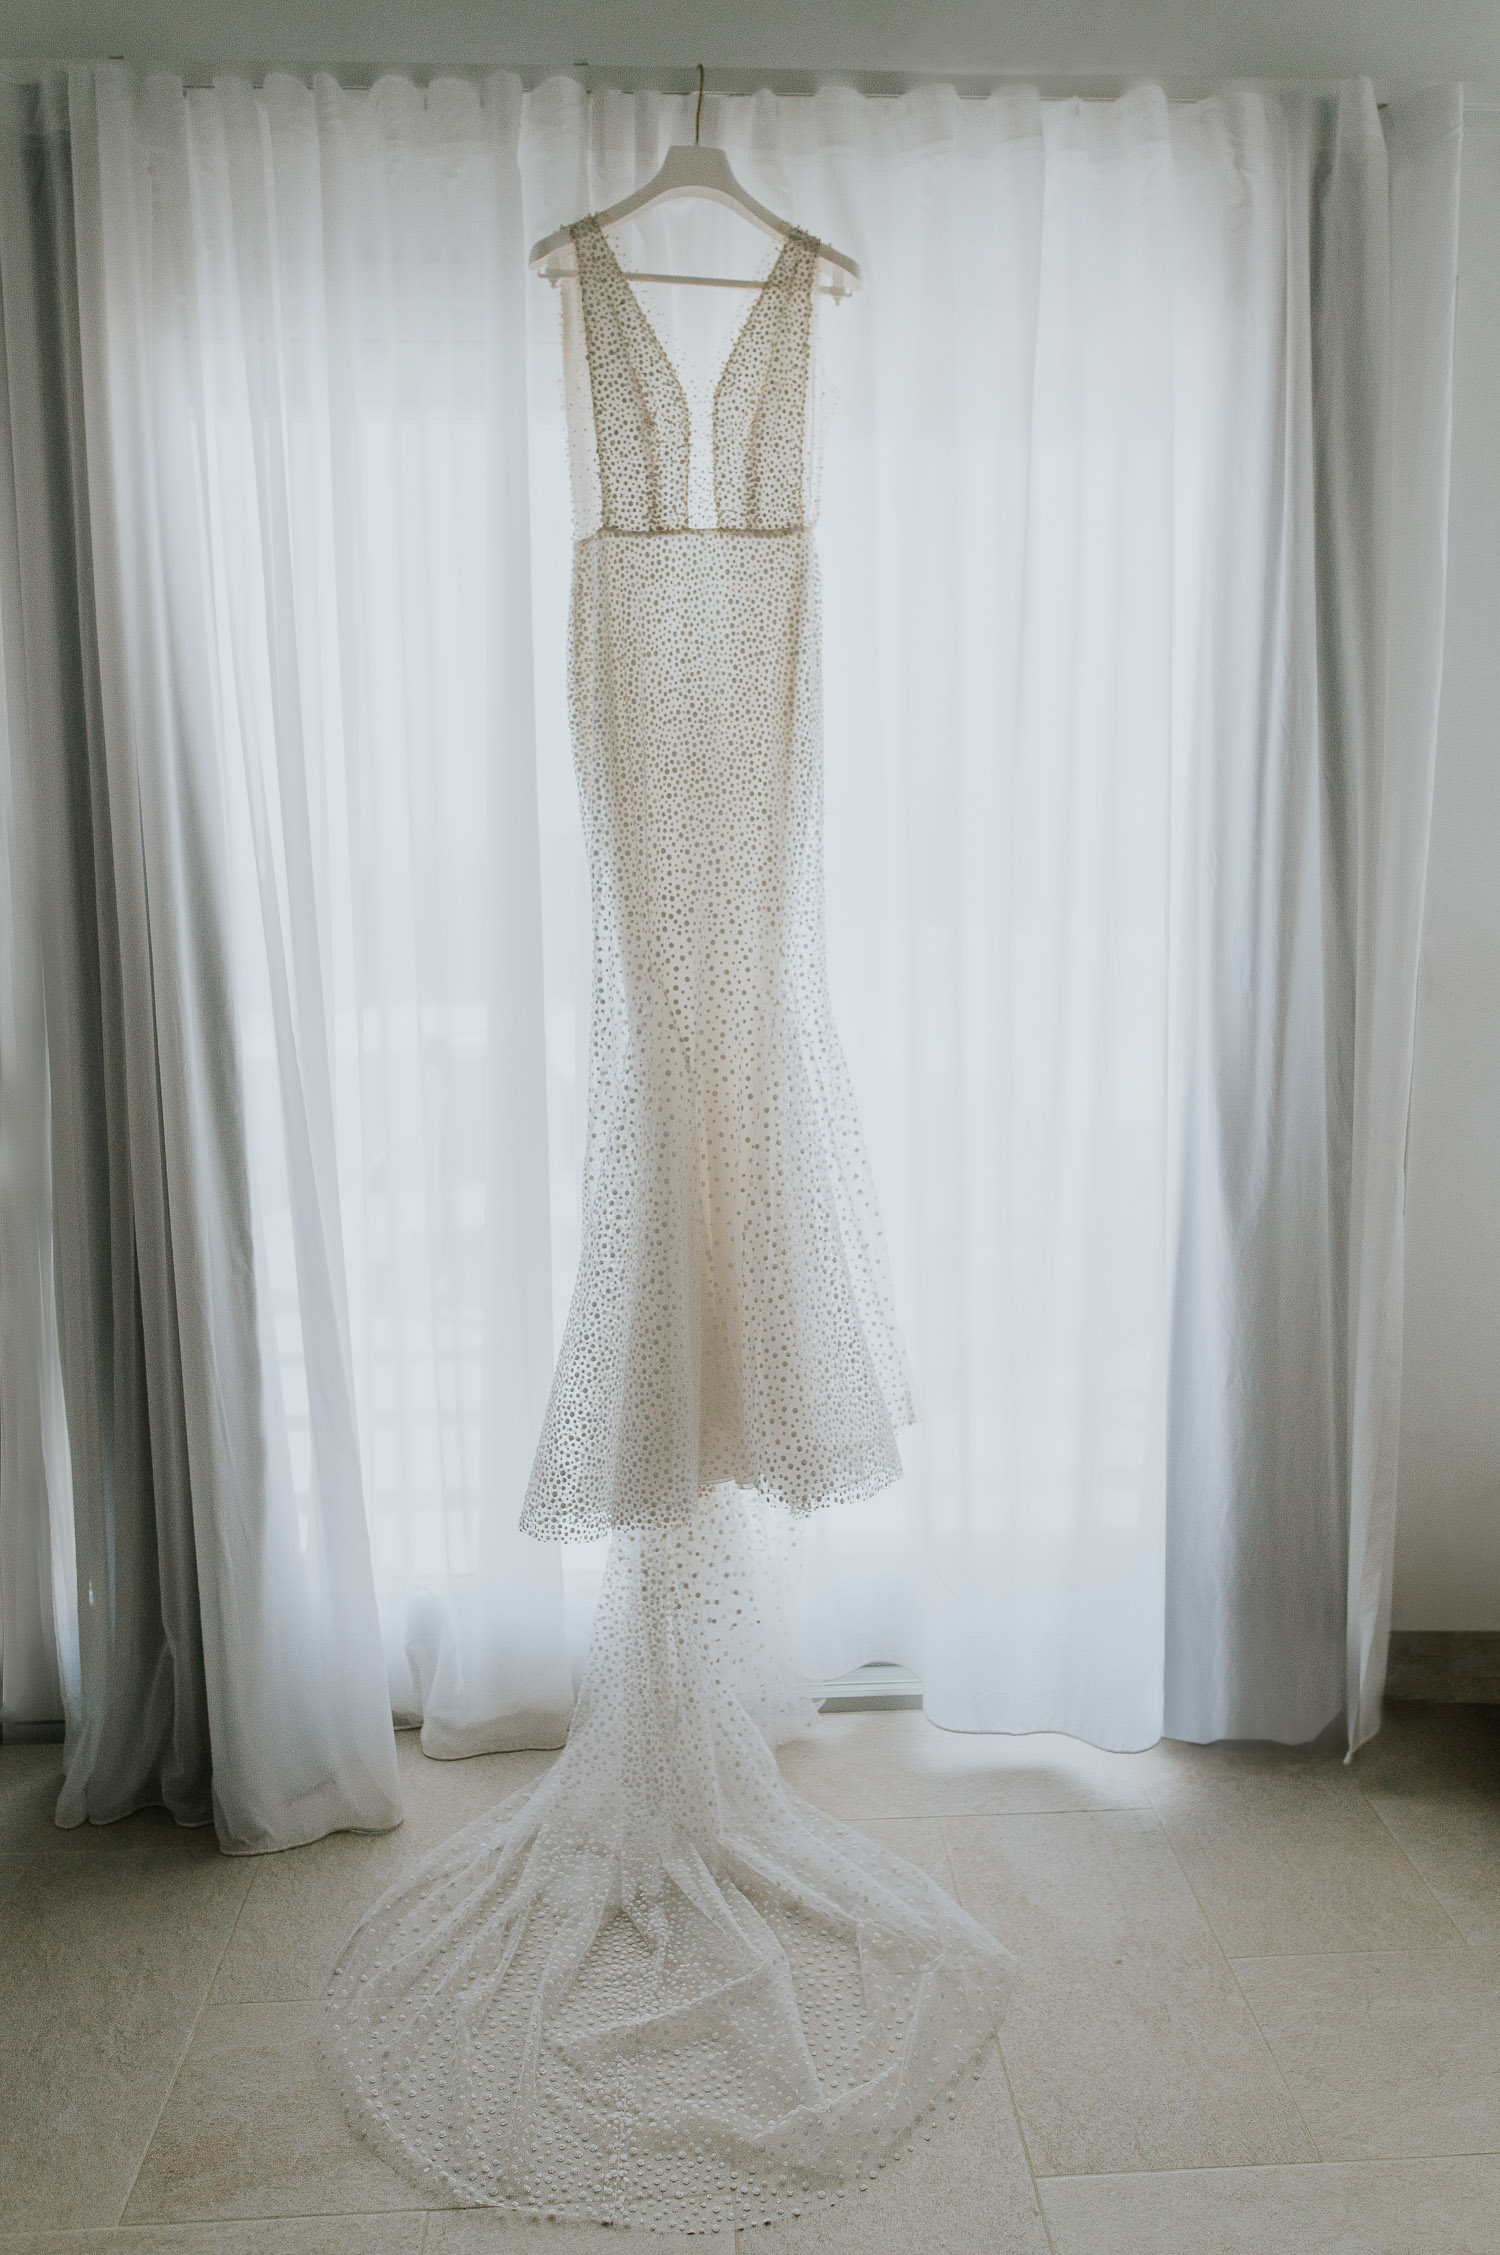 Rocabella Santorini Wedding: bride's details with her sparkling wedding dress by Wedding photographer Santorini.